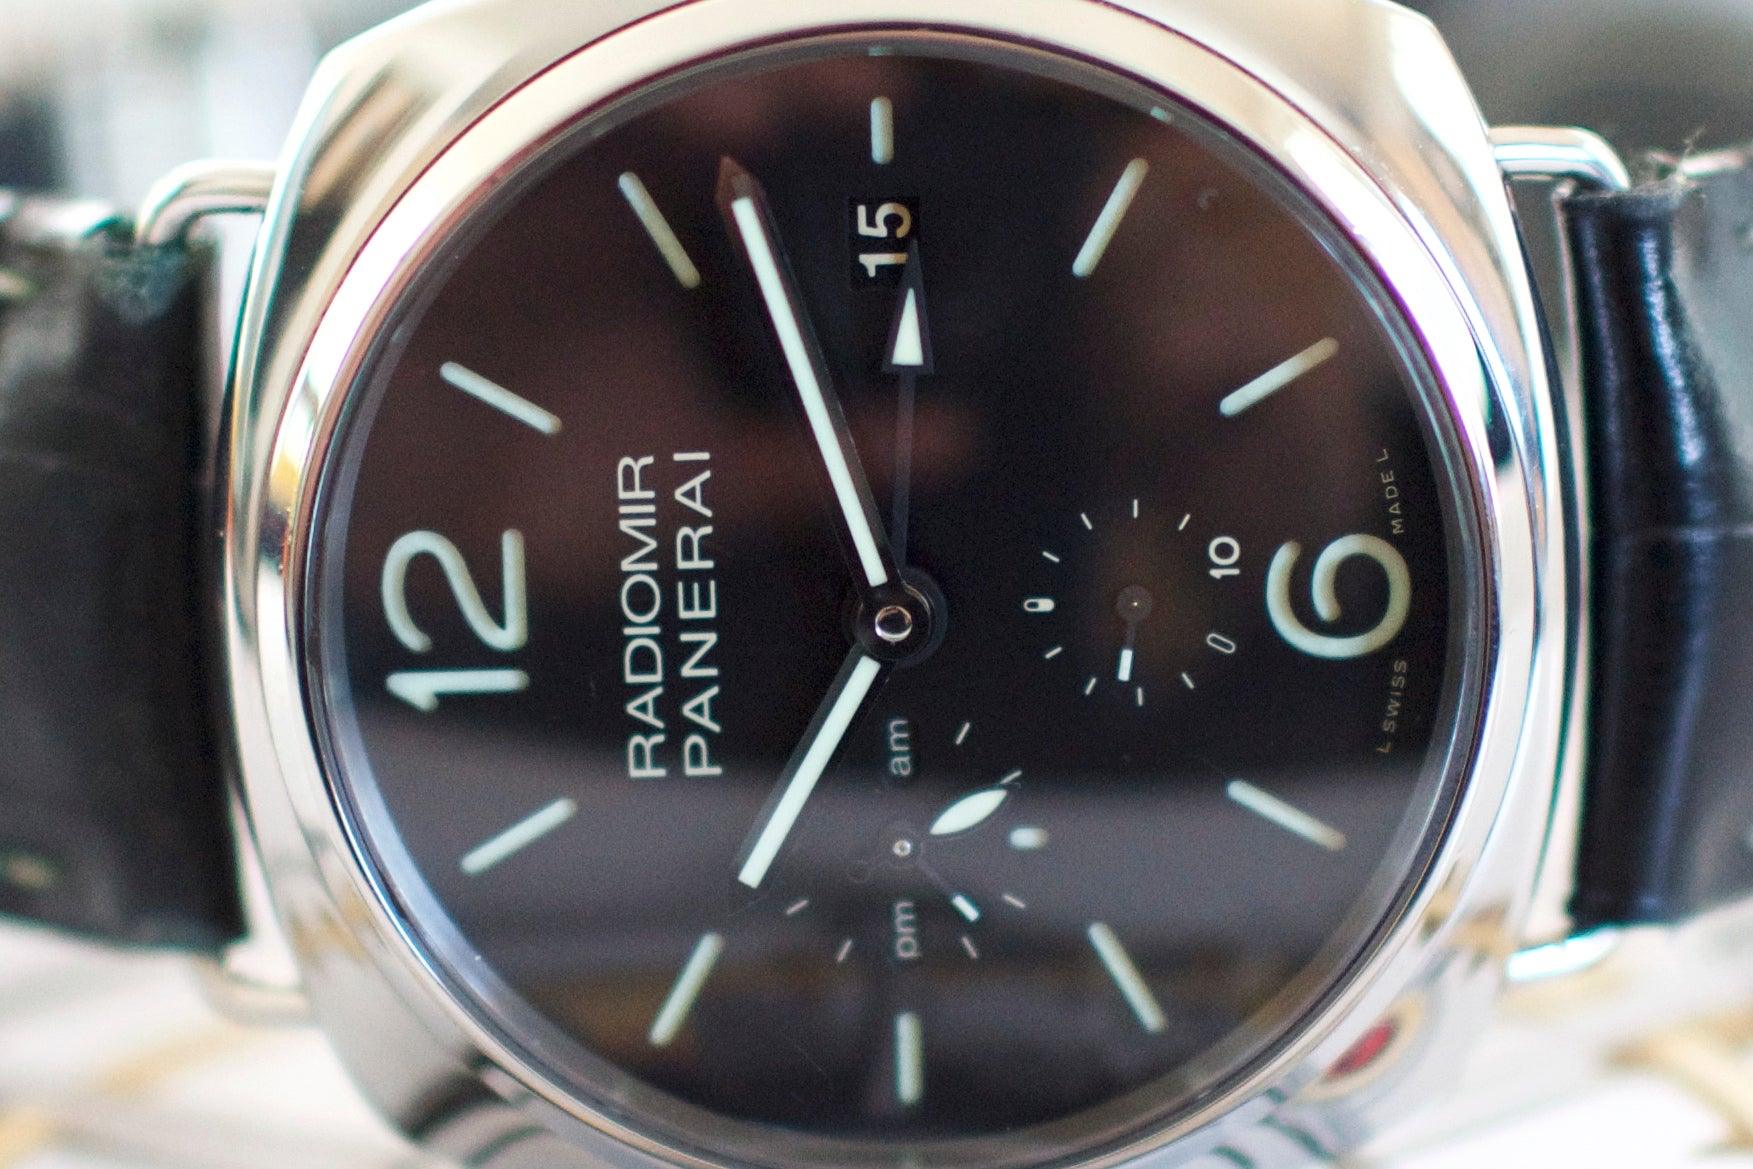 SOLDOUT: Panerai Radiomir 10 Days GMT PAM 323 00323 - WearingTime Luxury Watches